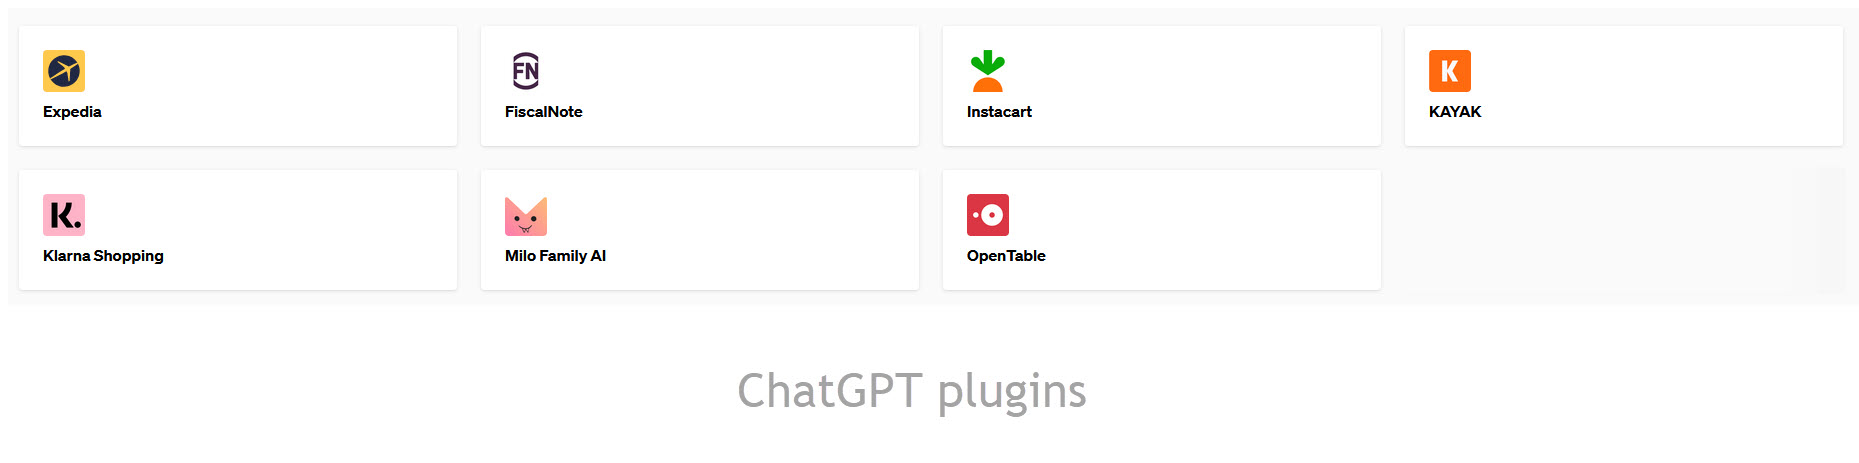 Best ChatGPT plugins